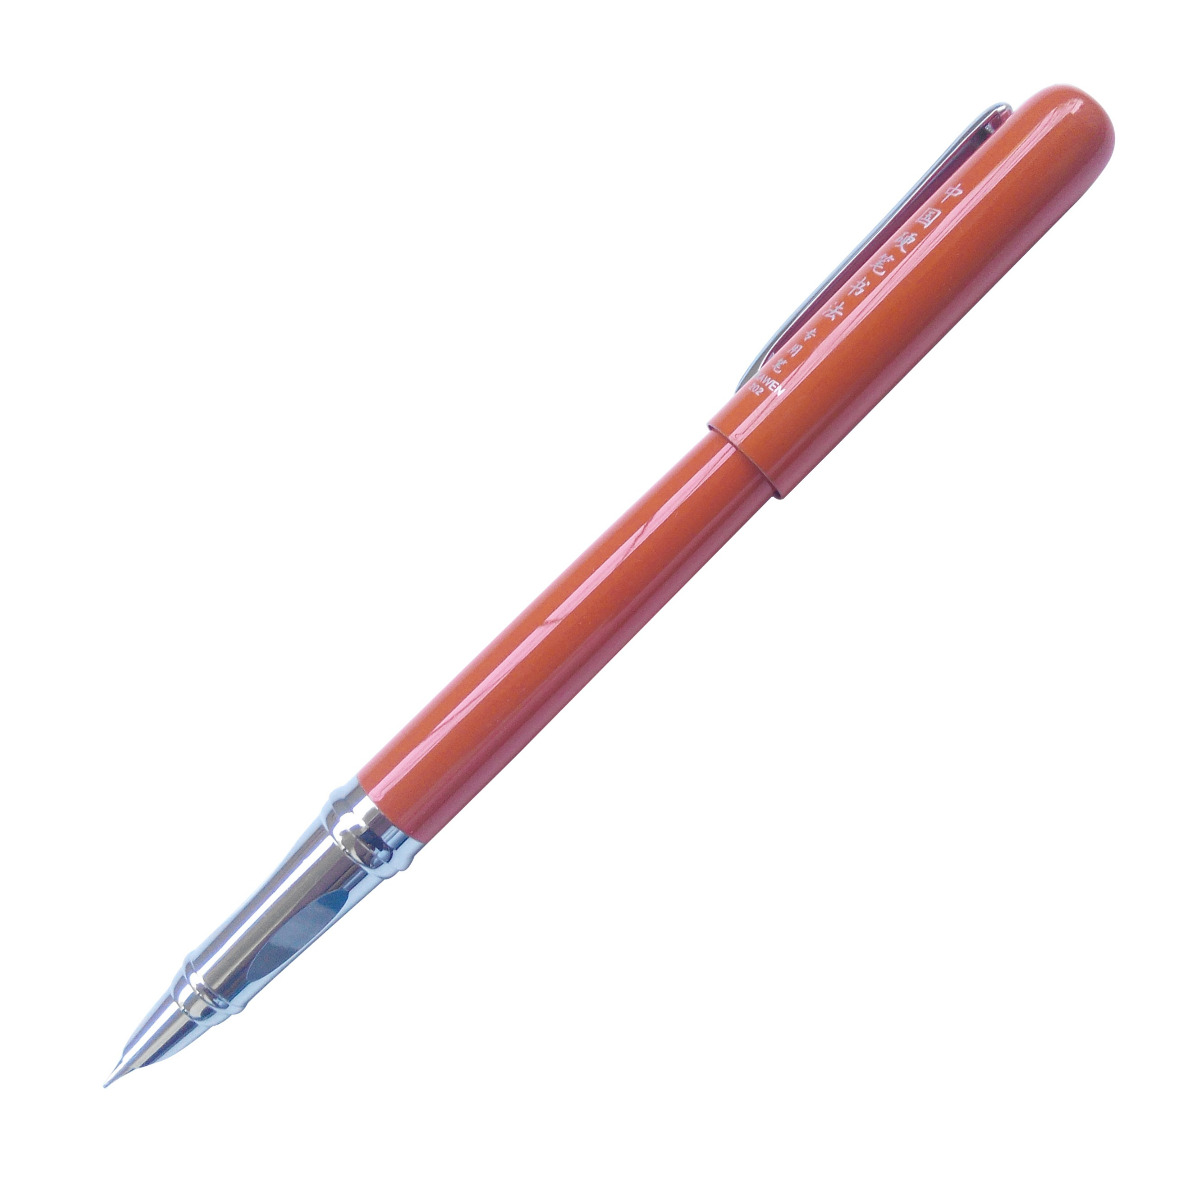 Dikawen Orange Color Body Silver Clip – Fountain Pen Model: 10965